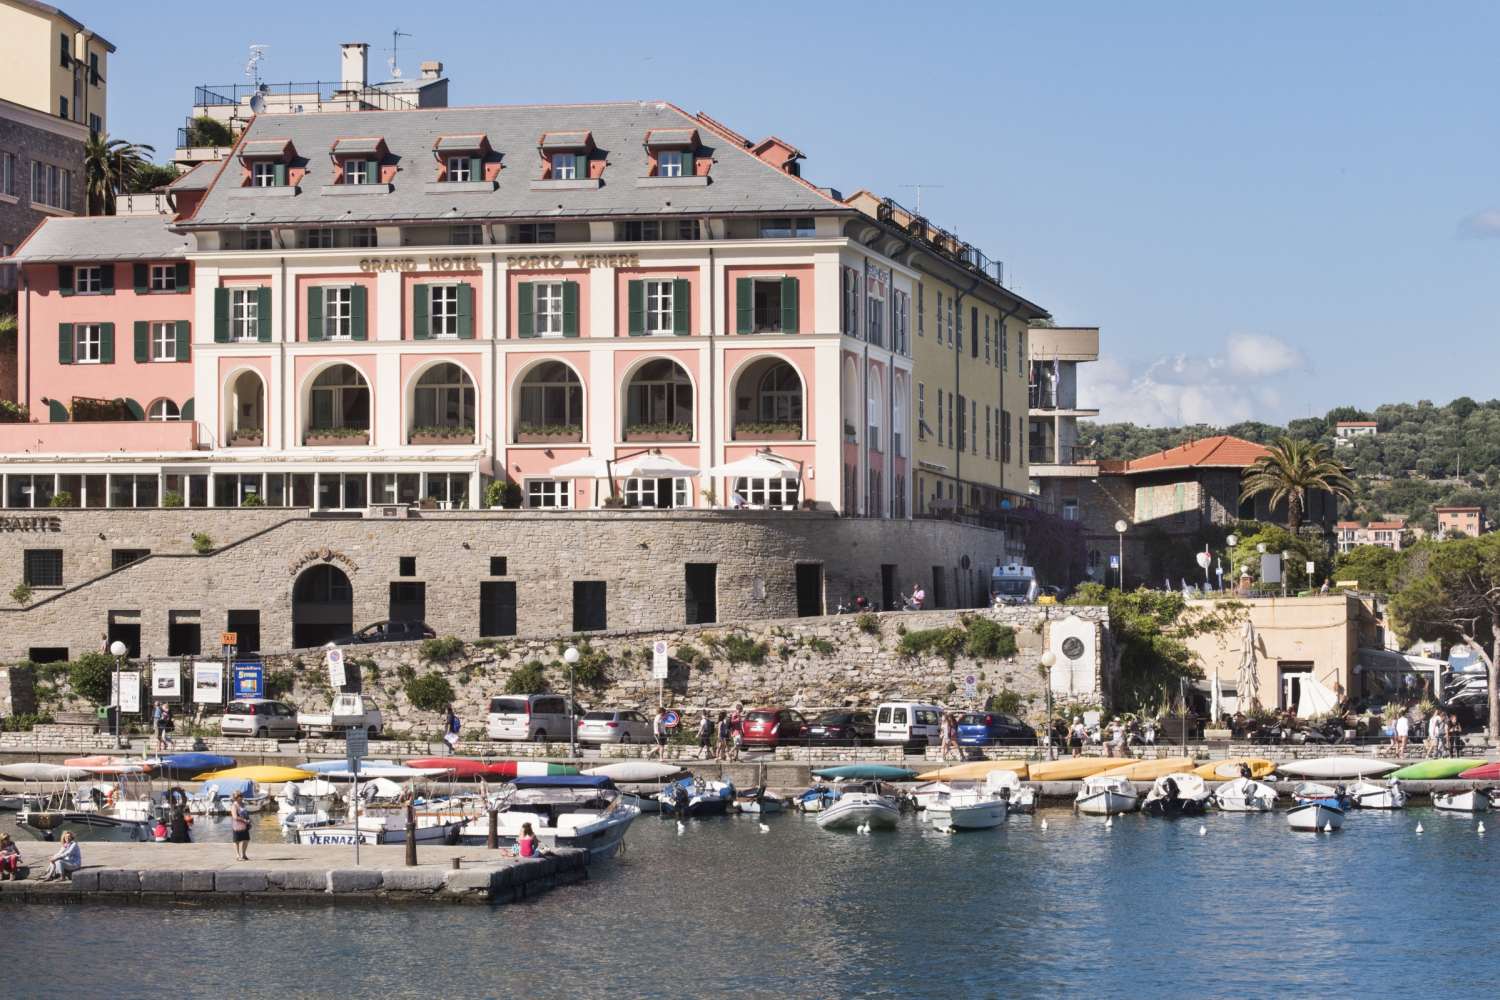 Grand Hotel Portovenere, Liguria - Italy